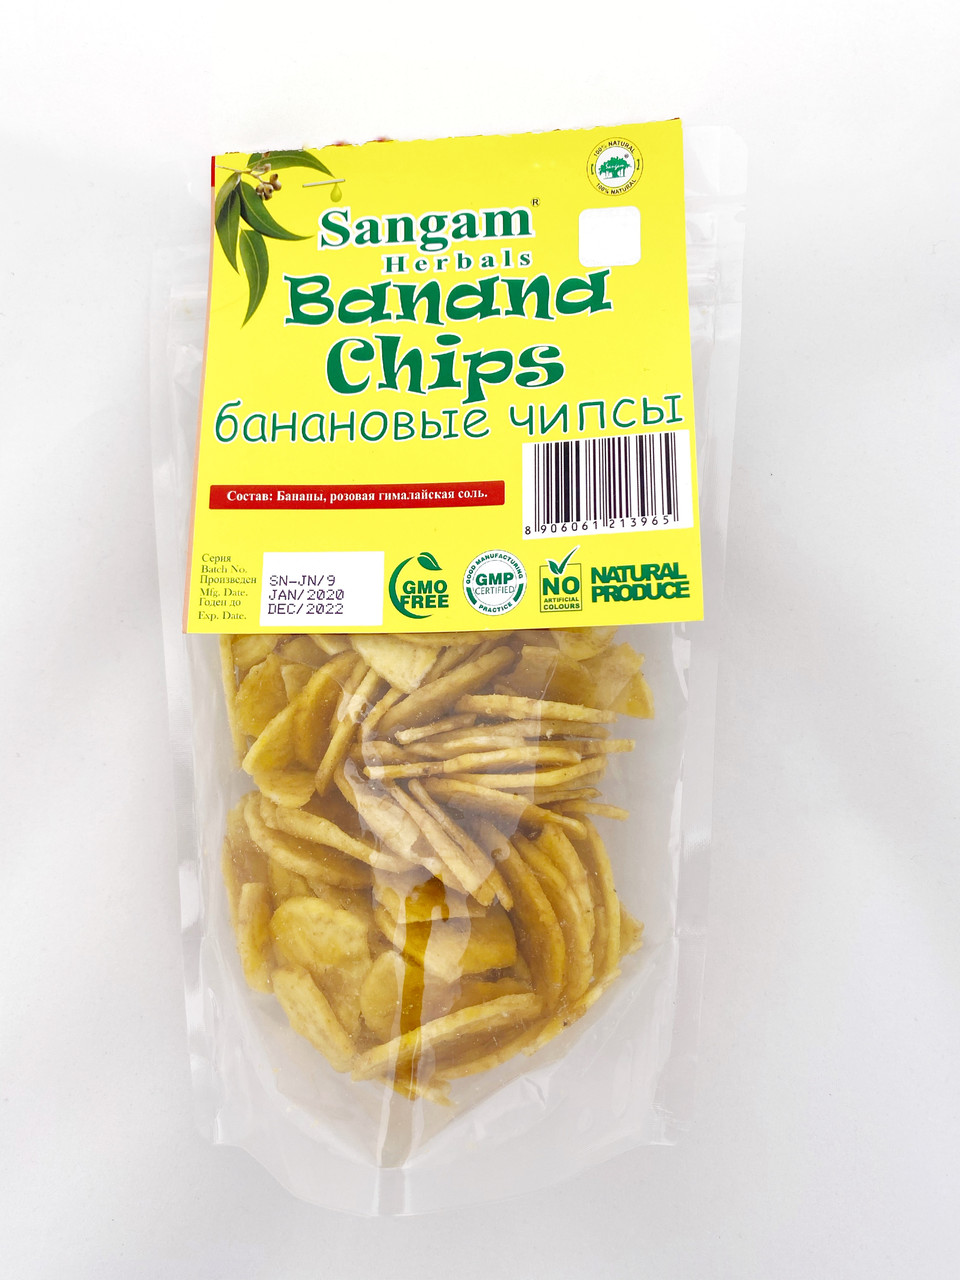 Банановые чипсы, Sangam